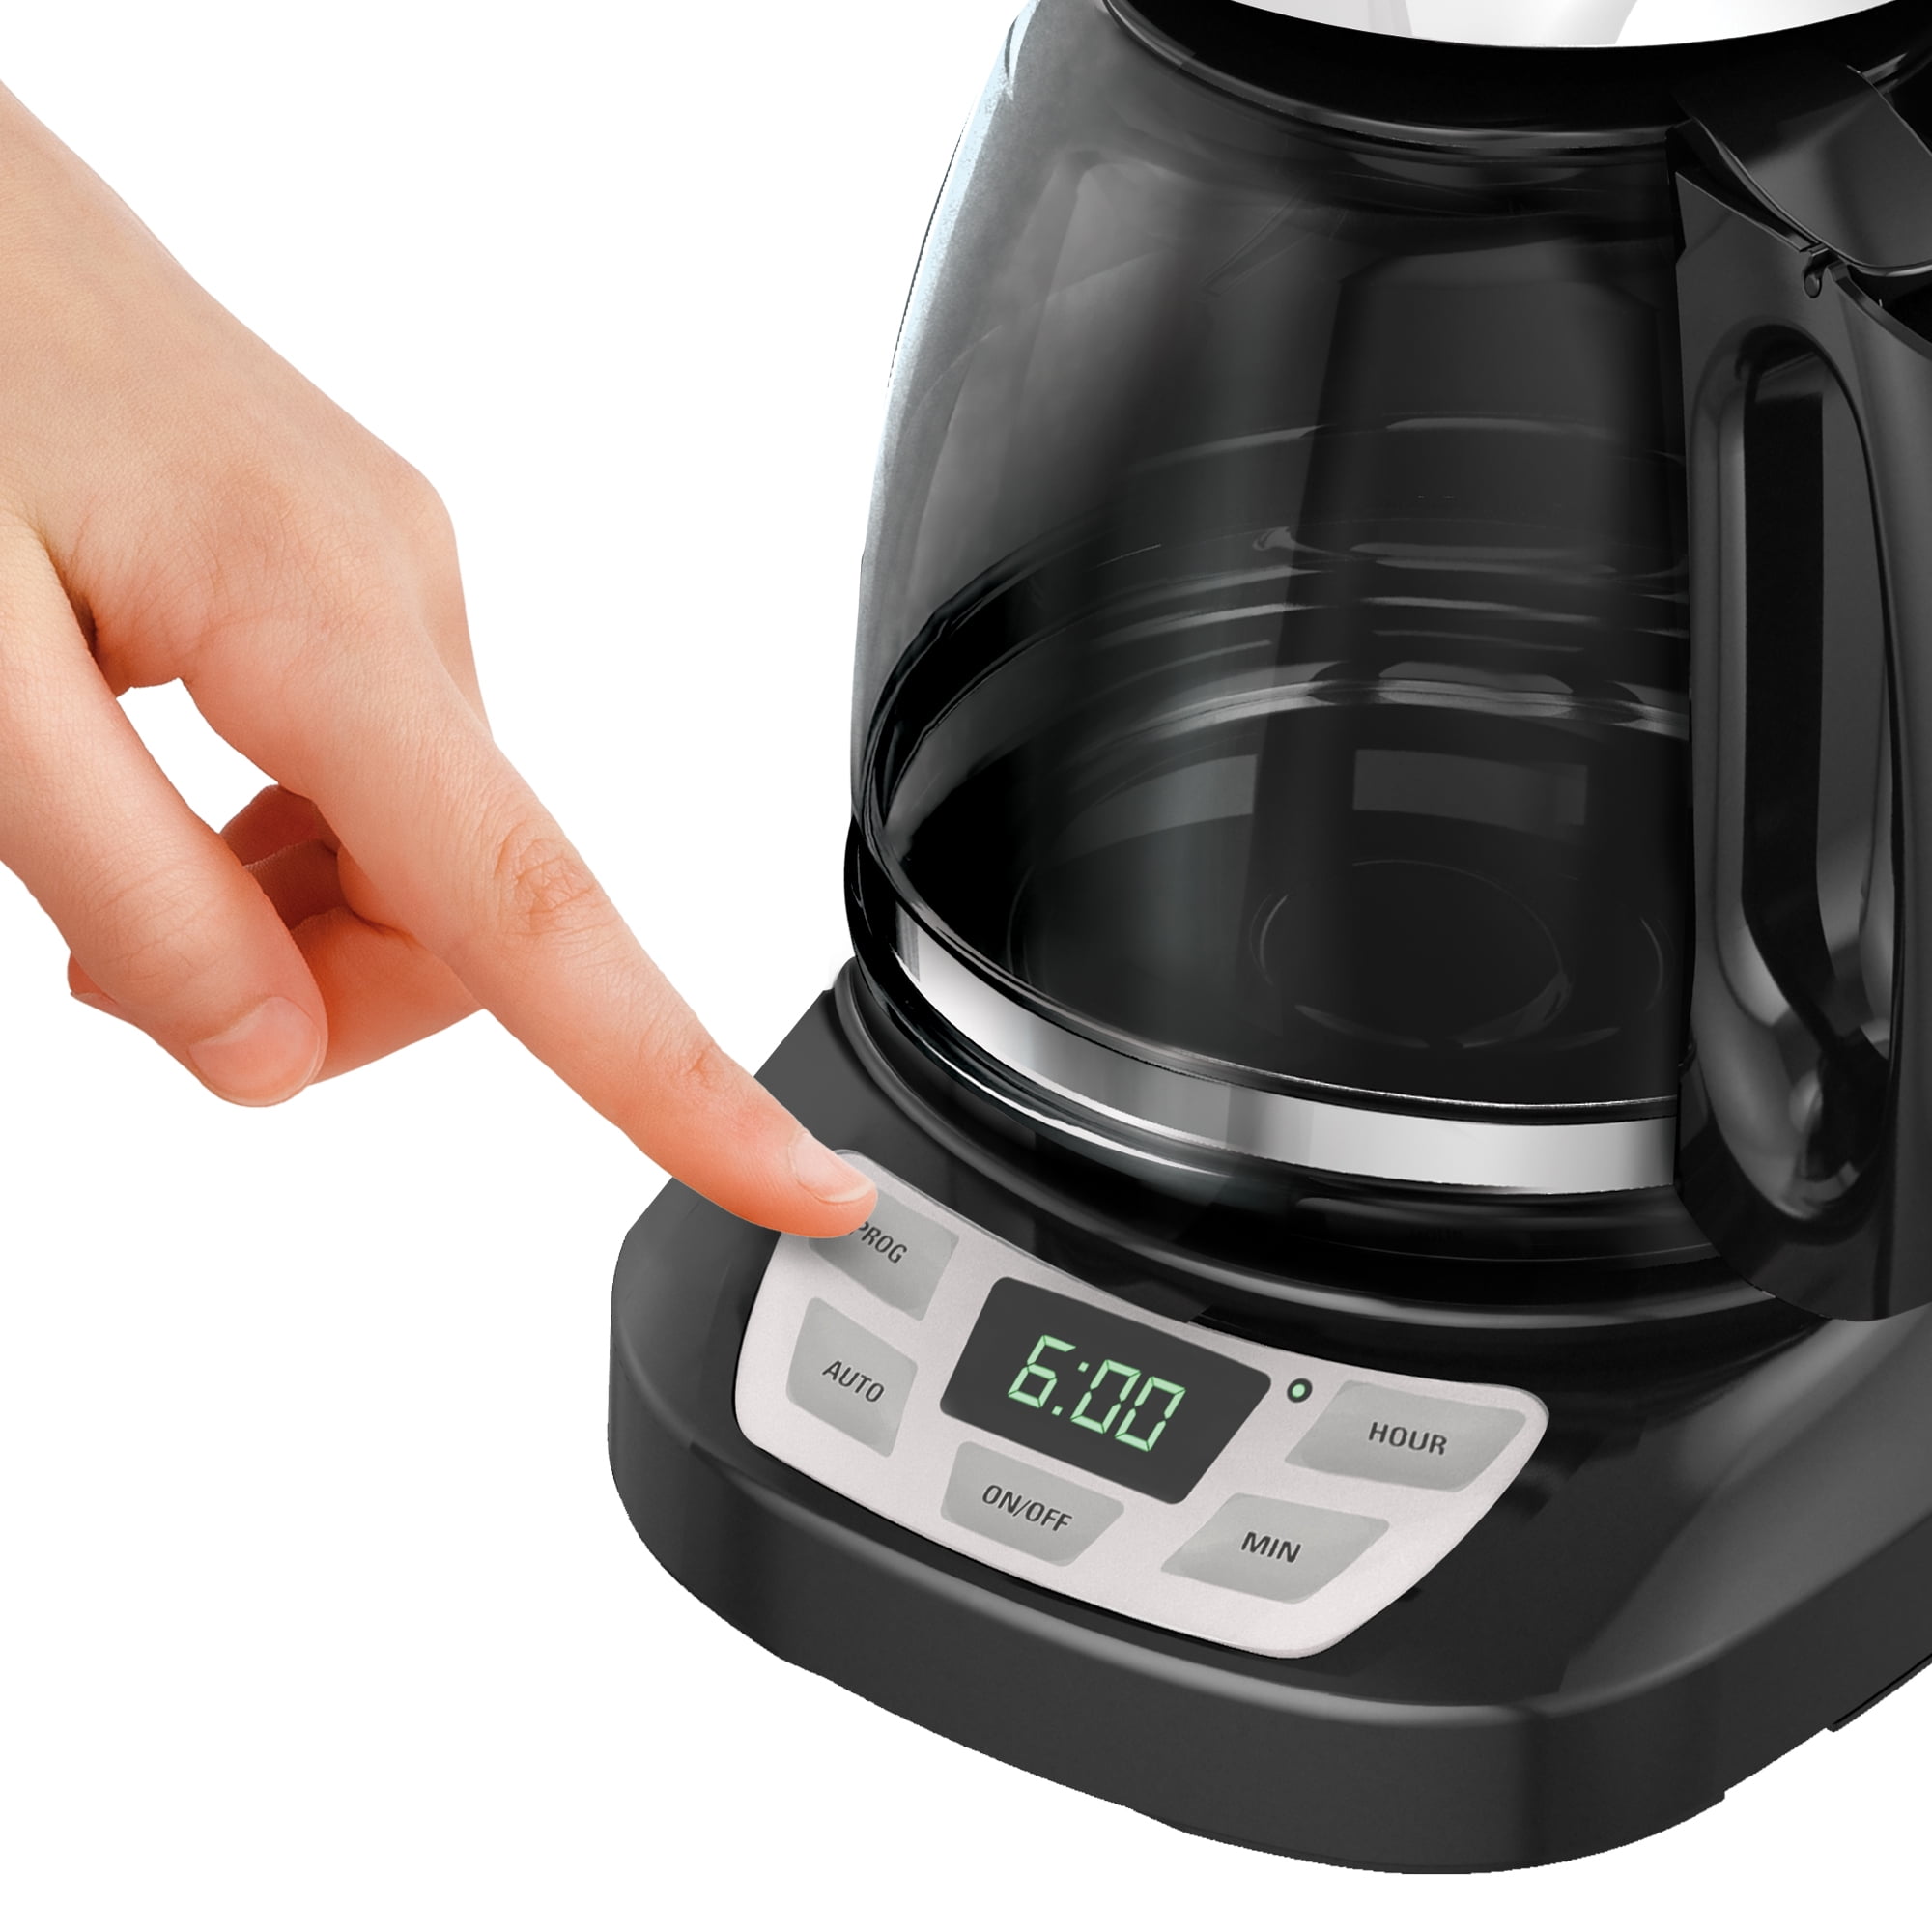 Black+Decker - How to Clean Your Coffeemaker - CM1060B 